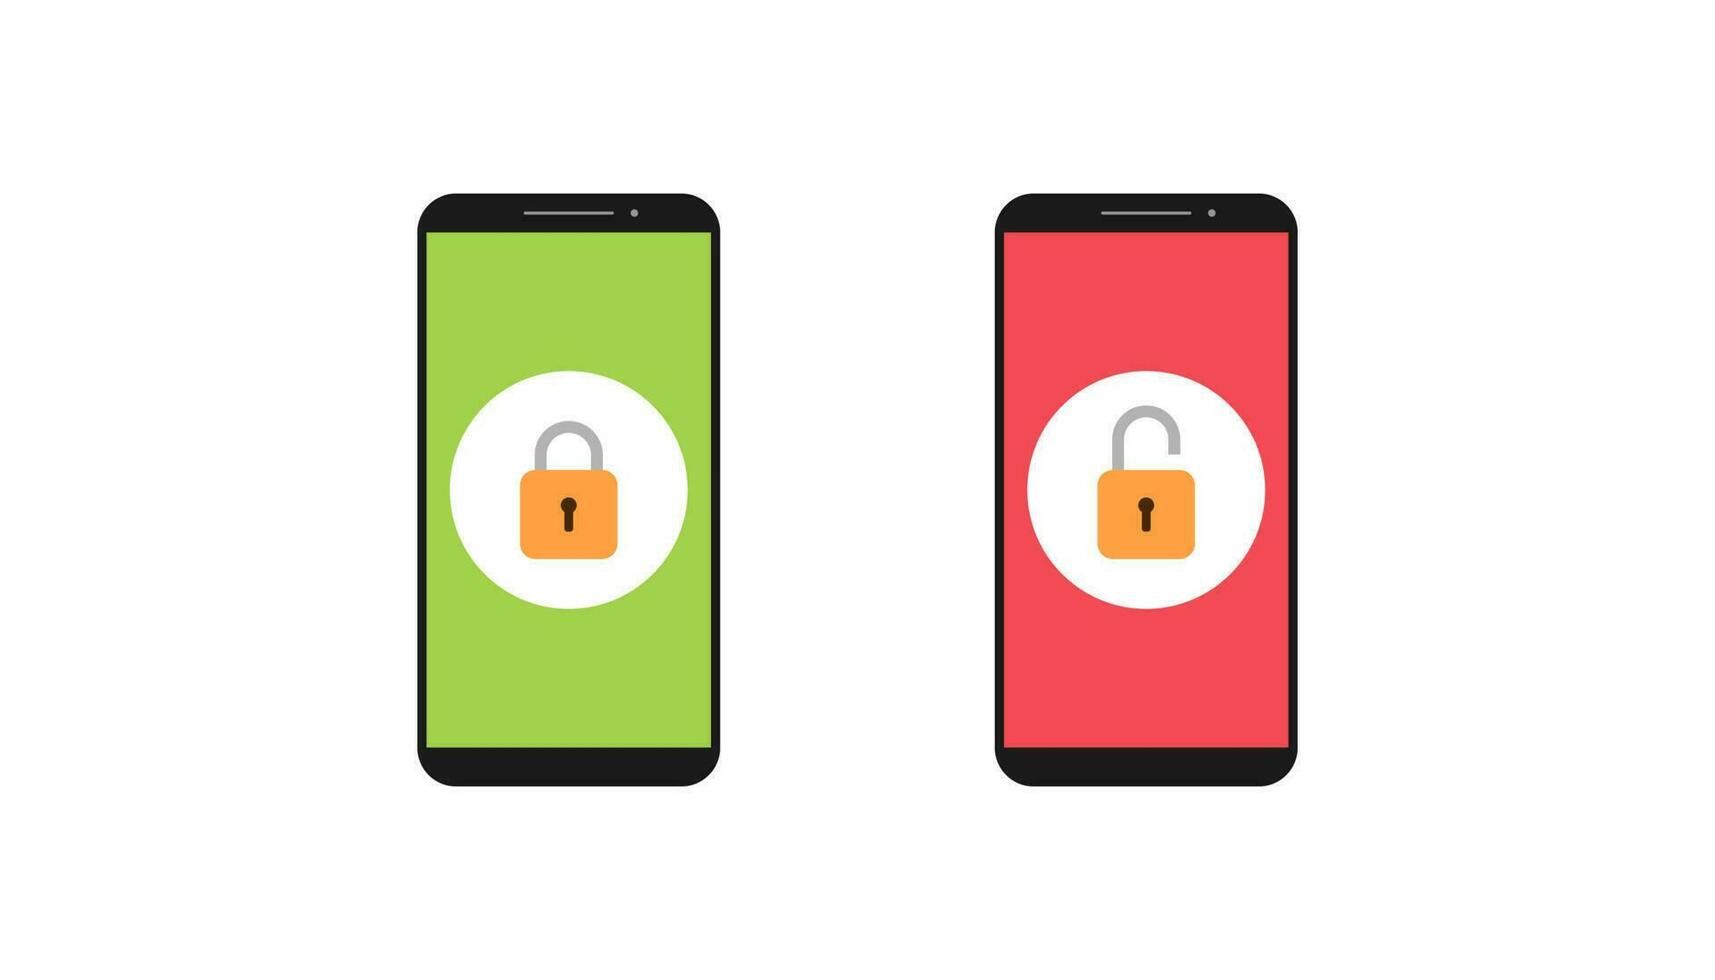 Smartphone and padlock, smartphone security data illustration vector